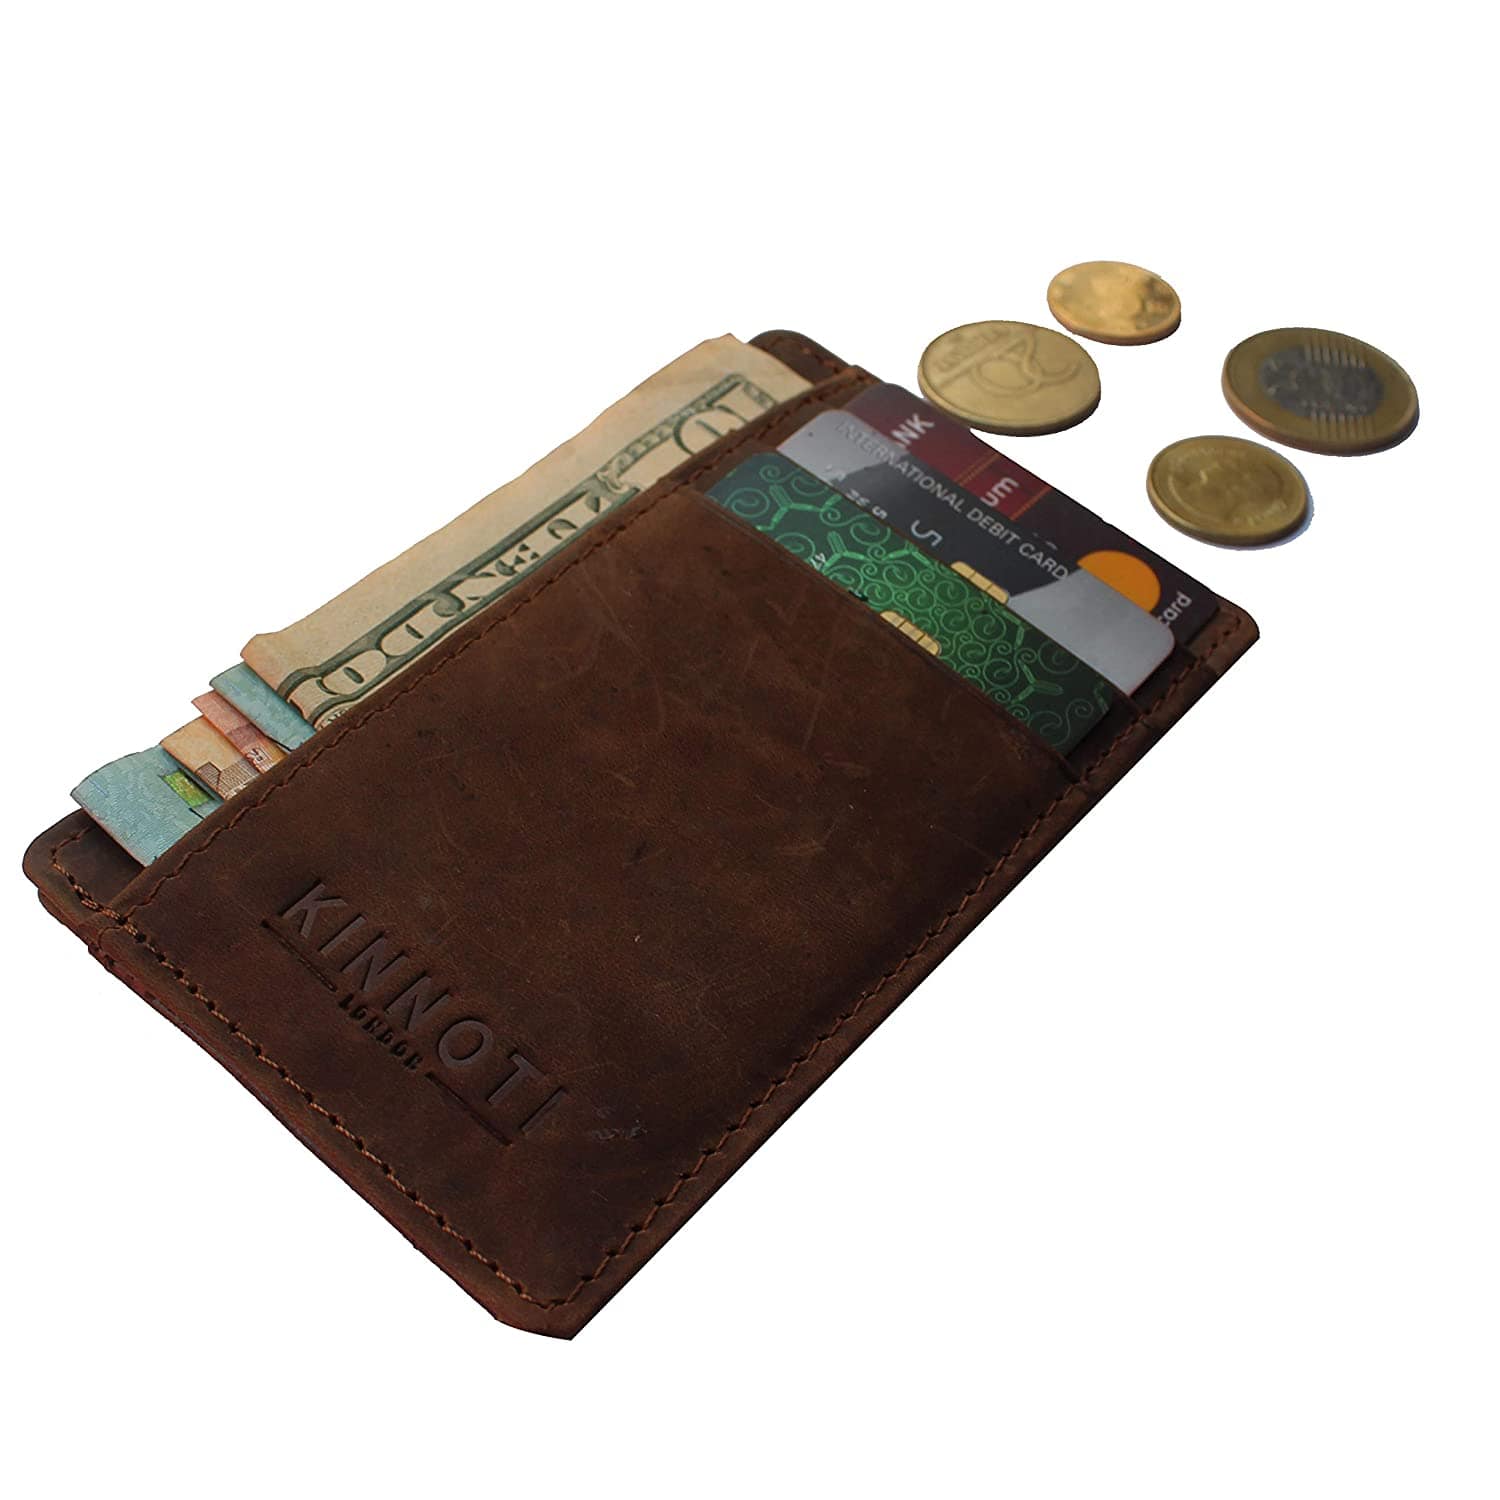 kinnoti RFID Minimalist Slim Credit Card Holder With 3 Hidden Pockets